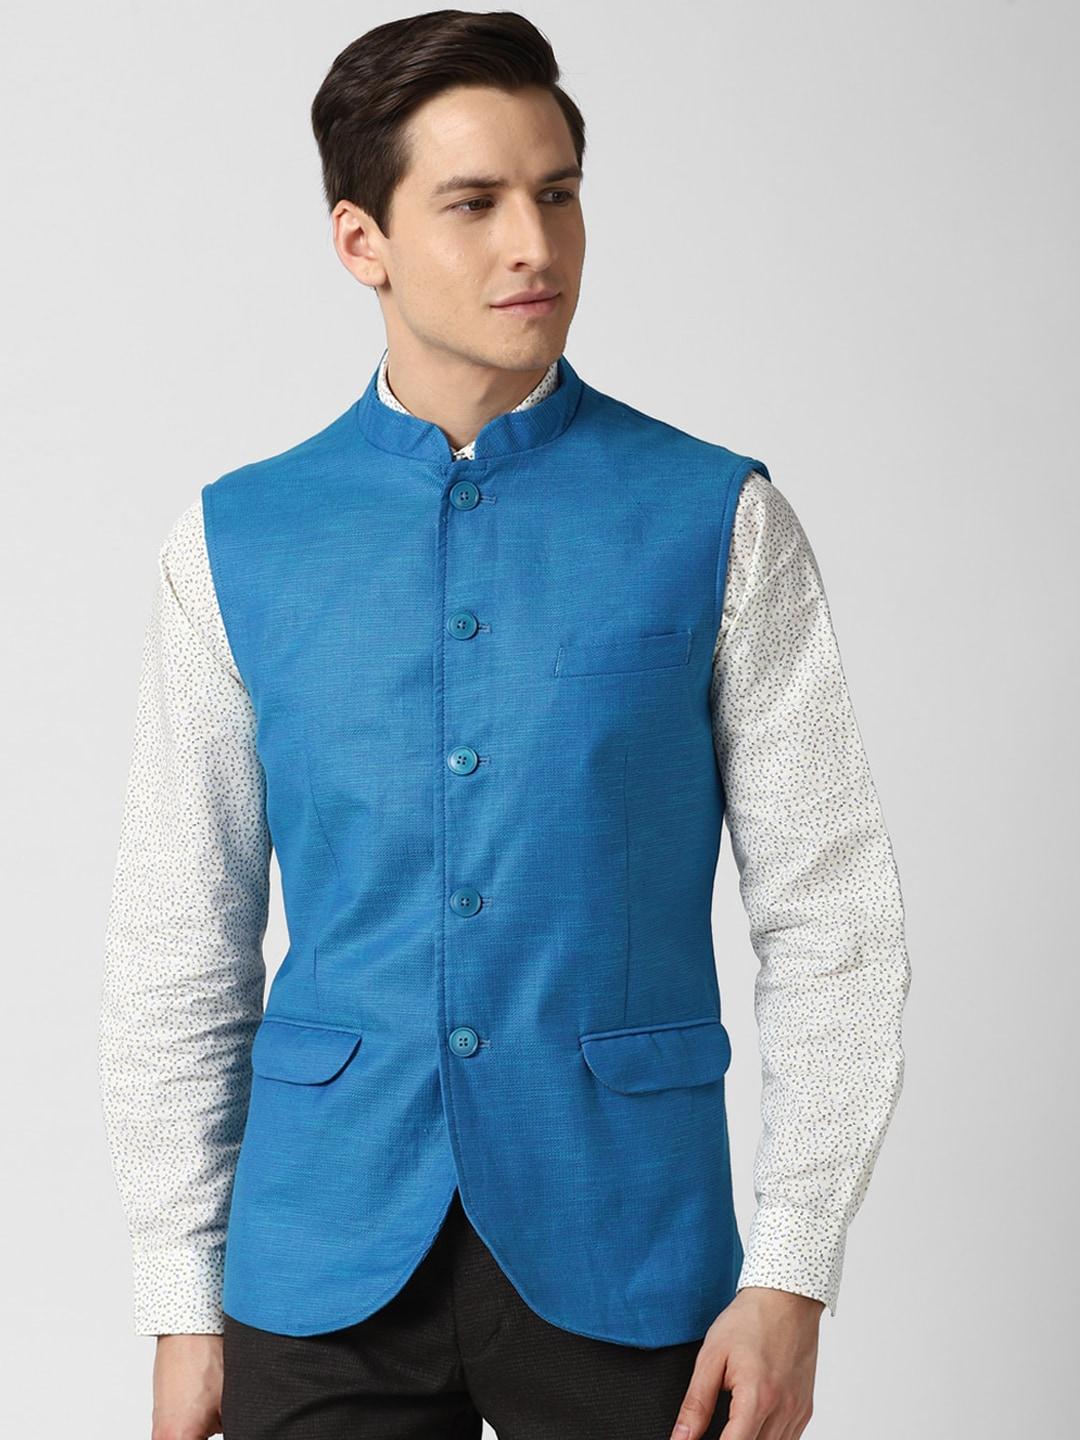 peter england elite men blue solid woven nehru jacket